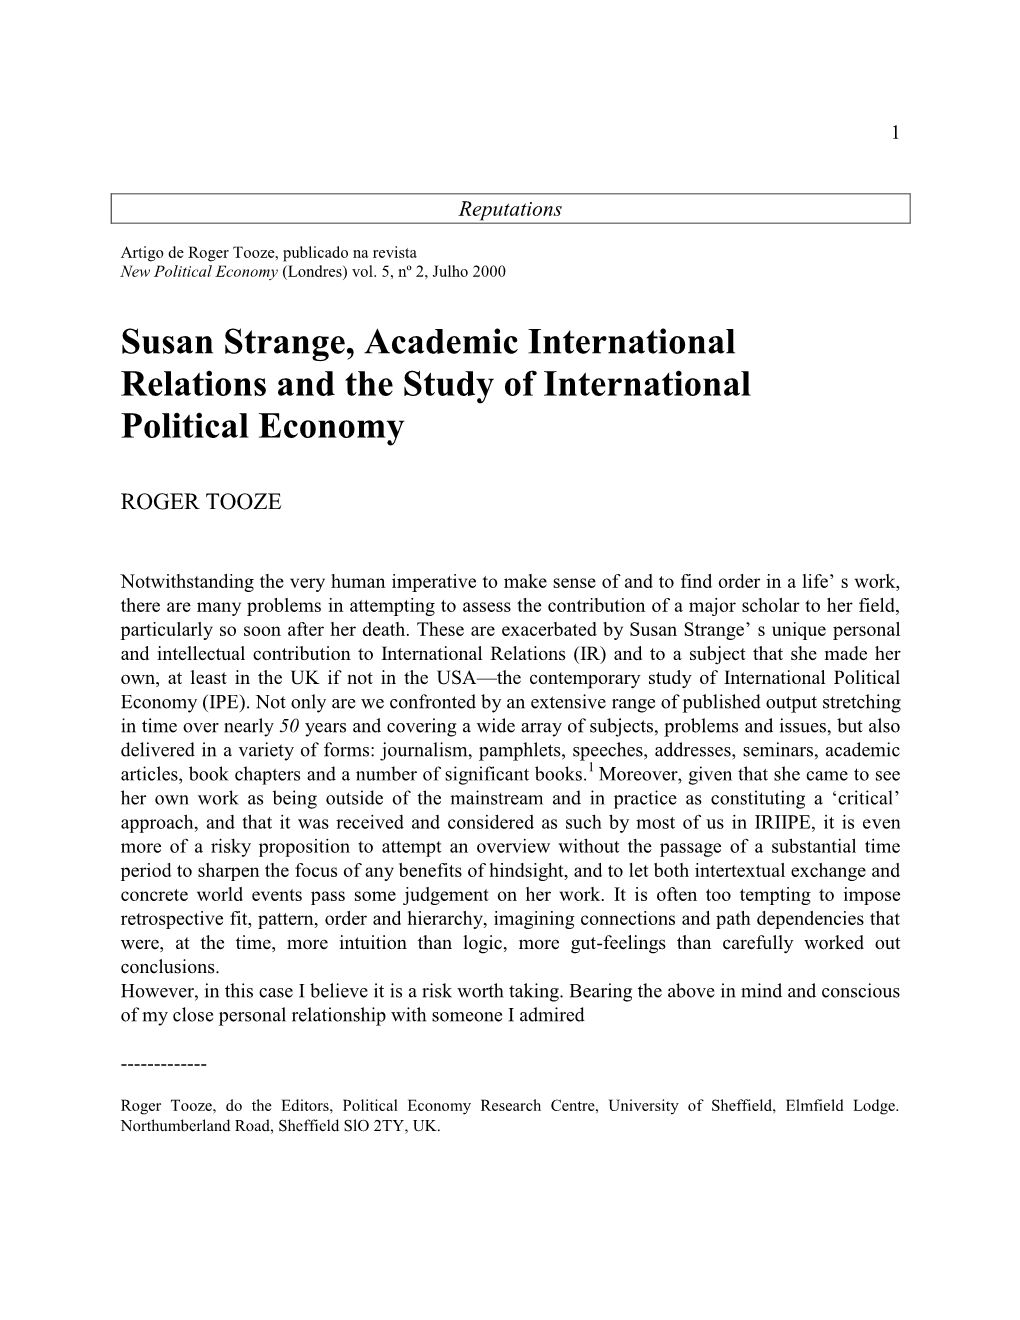 Susan Strange, Academic International Relations and the Study of International Political Economy